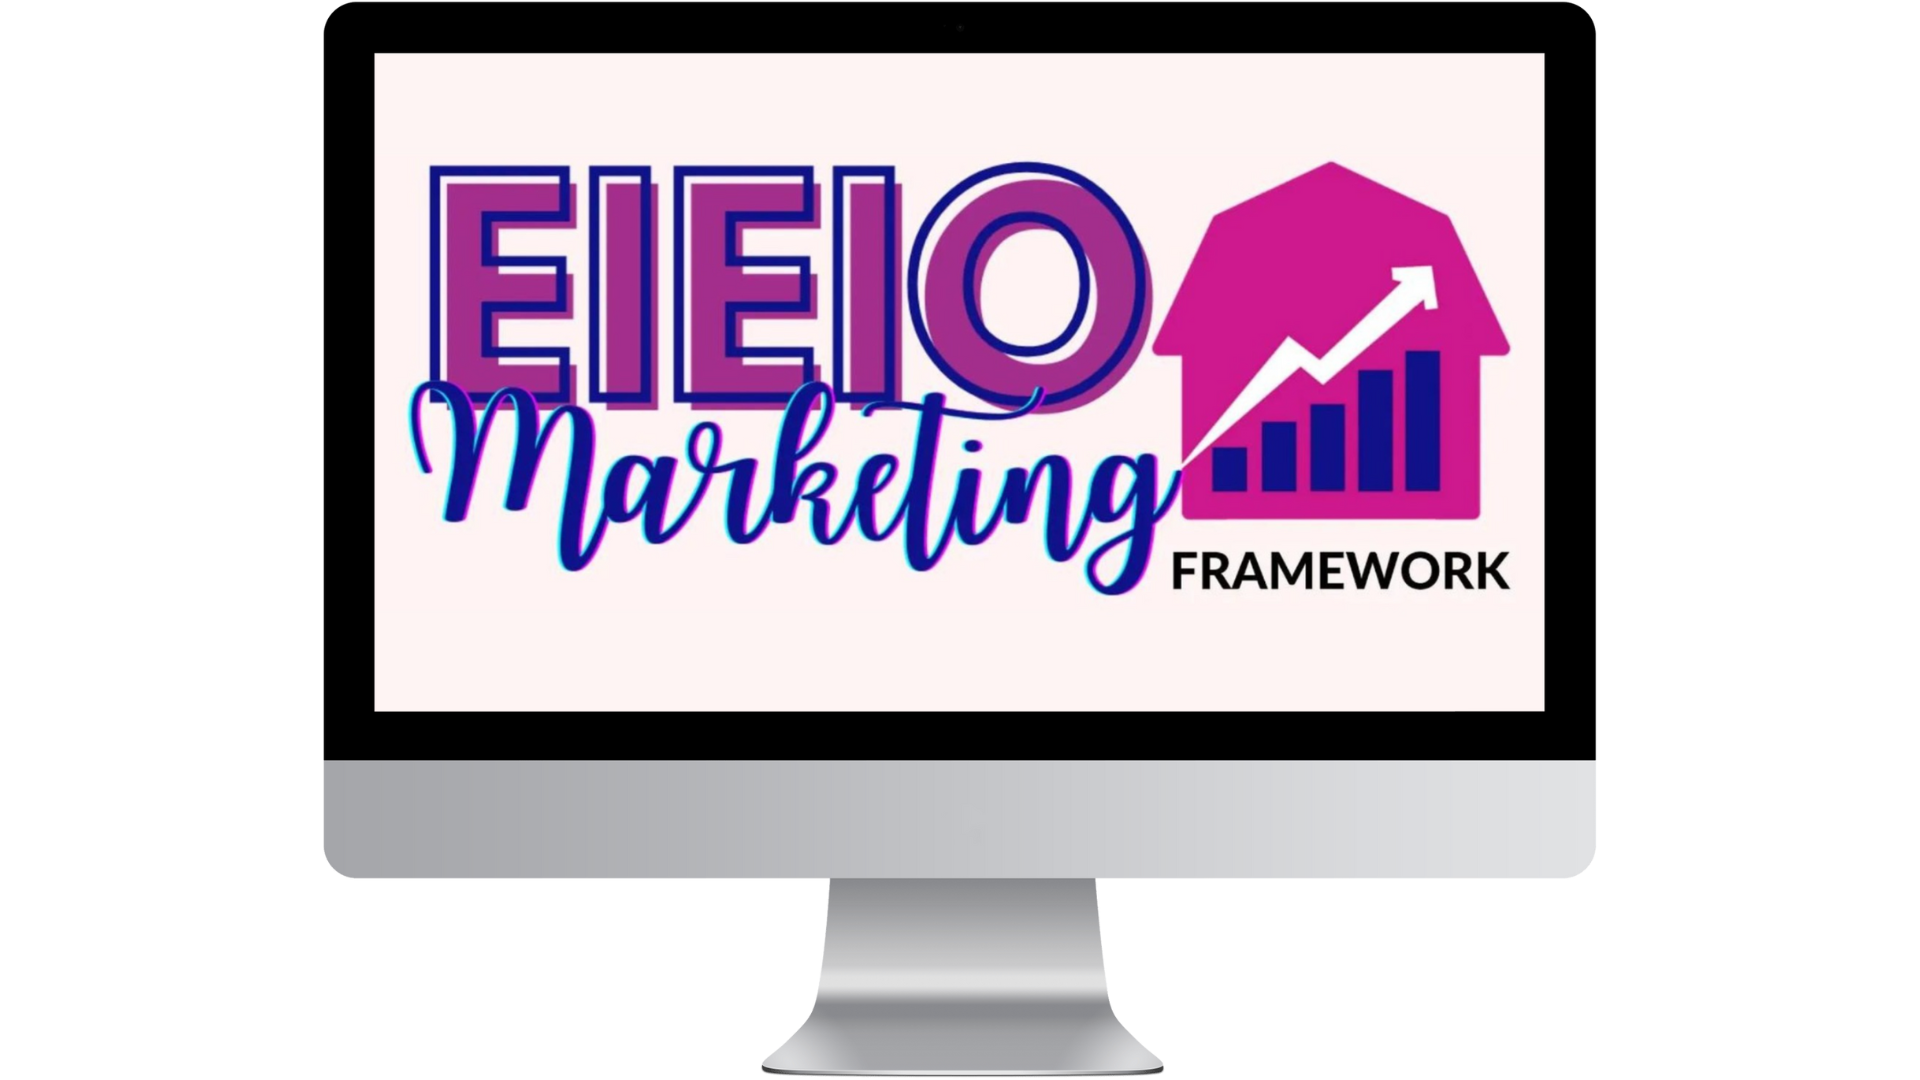 EIEIO Marketing Framework mockup on computer monitor